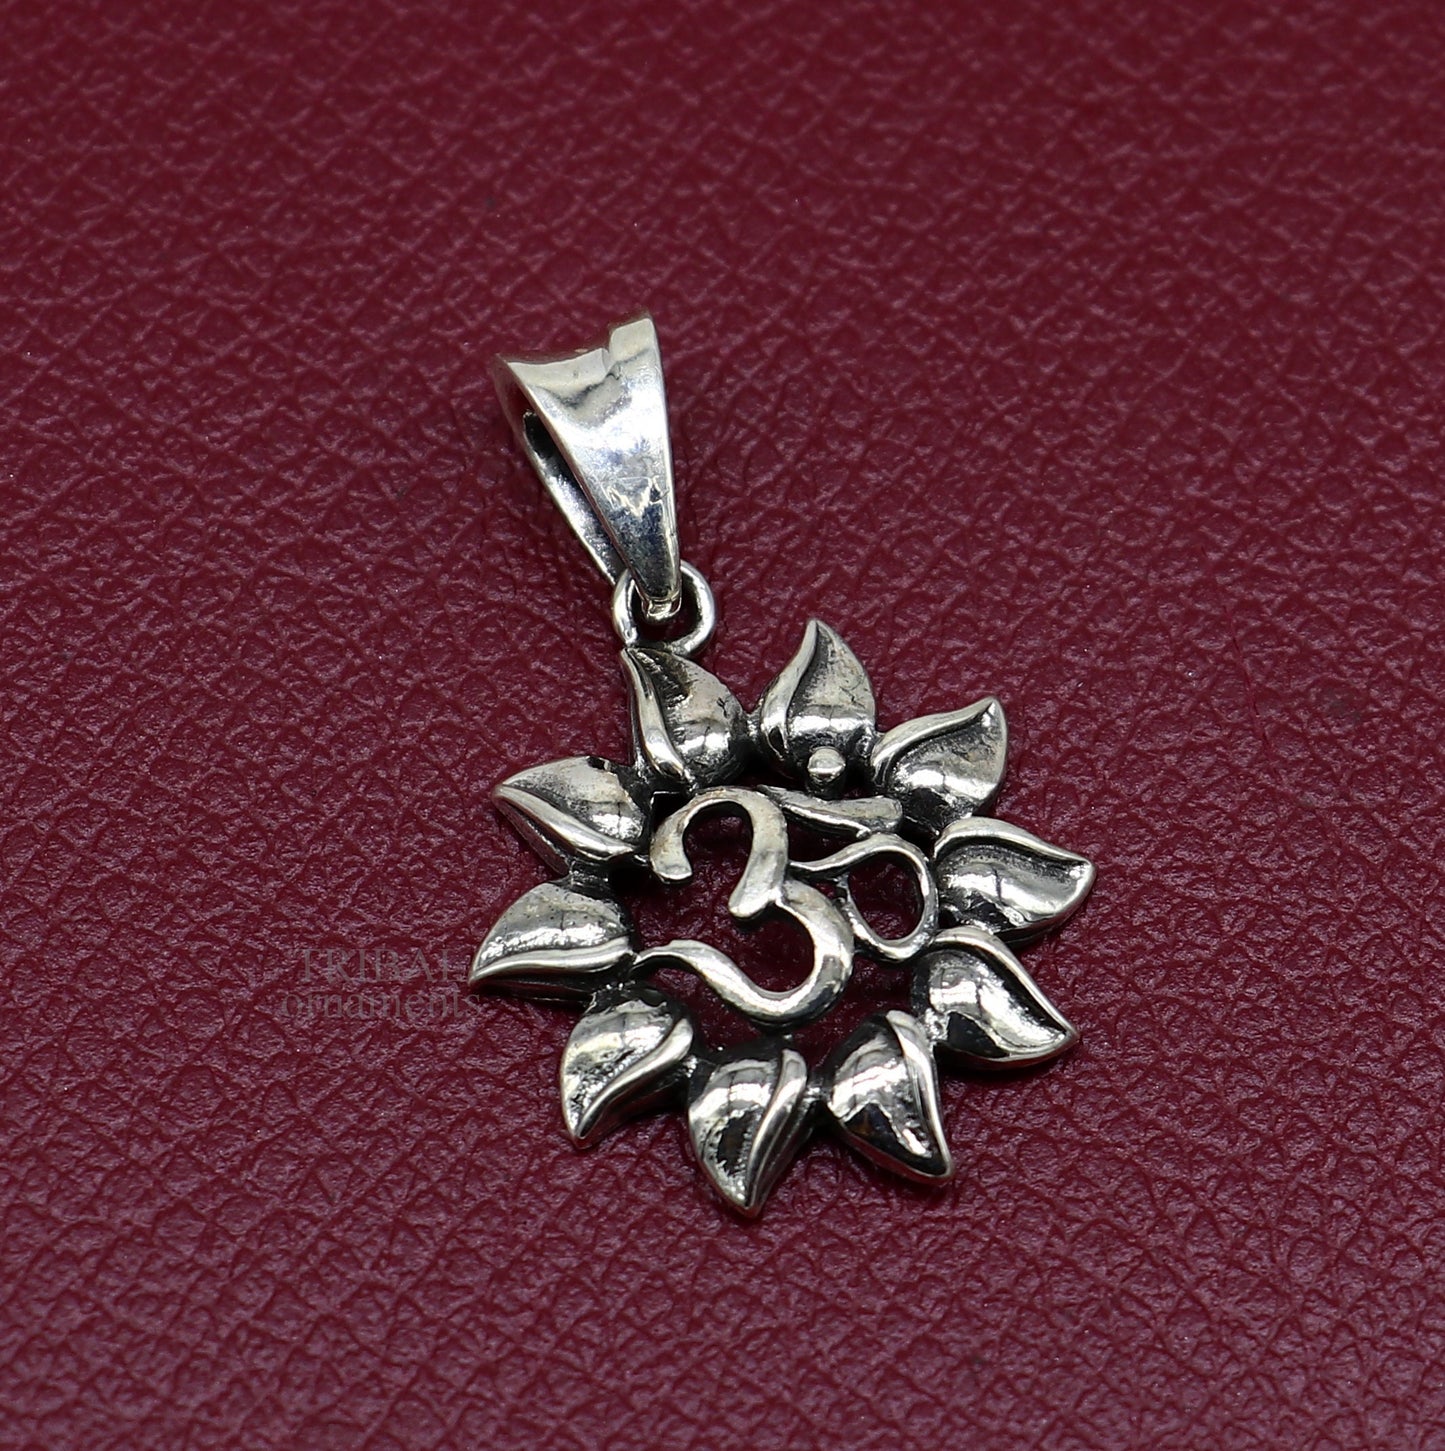 925 sterling silver handmade Hindu mantra 'Aum' OM pendant, amazing stylish good luck pendant personalized jewelry tribal jewelry ssp1429 - TRIBAL ORNAMENTS